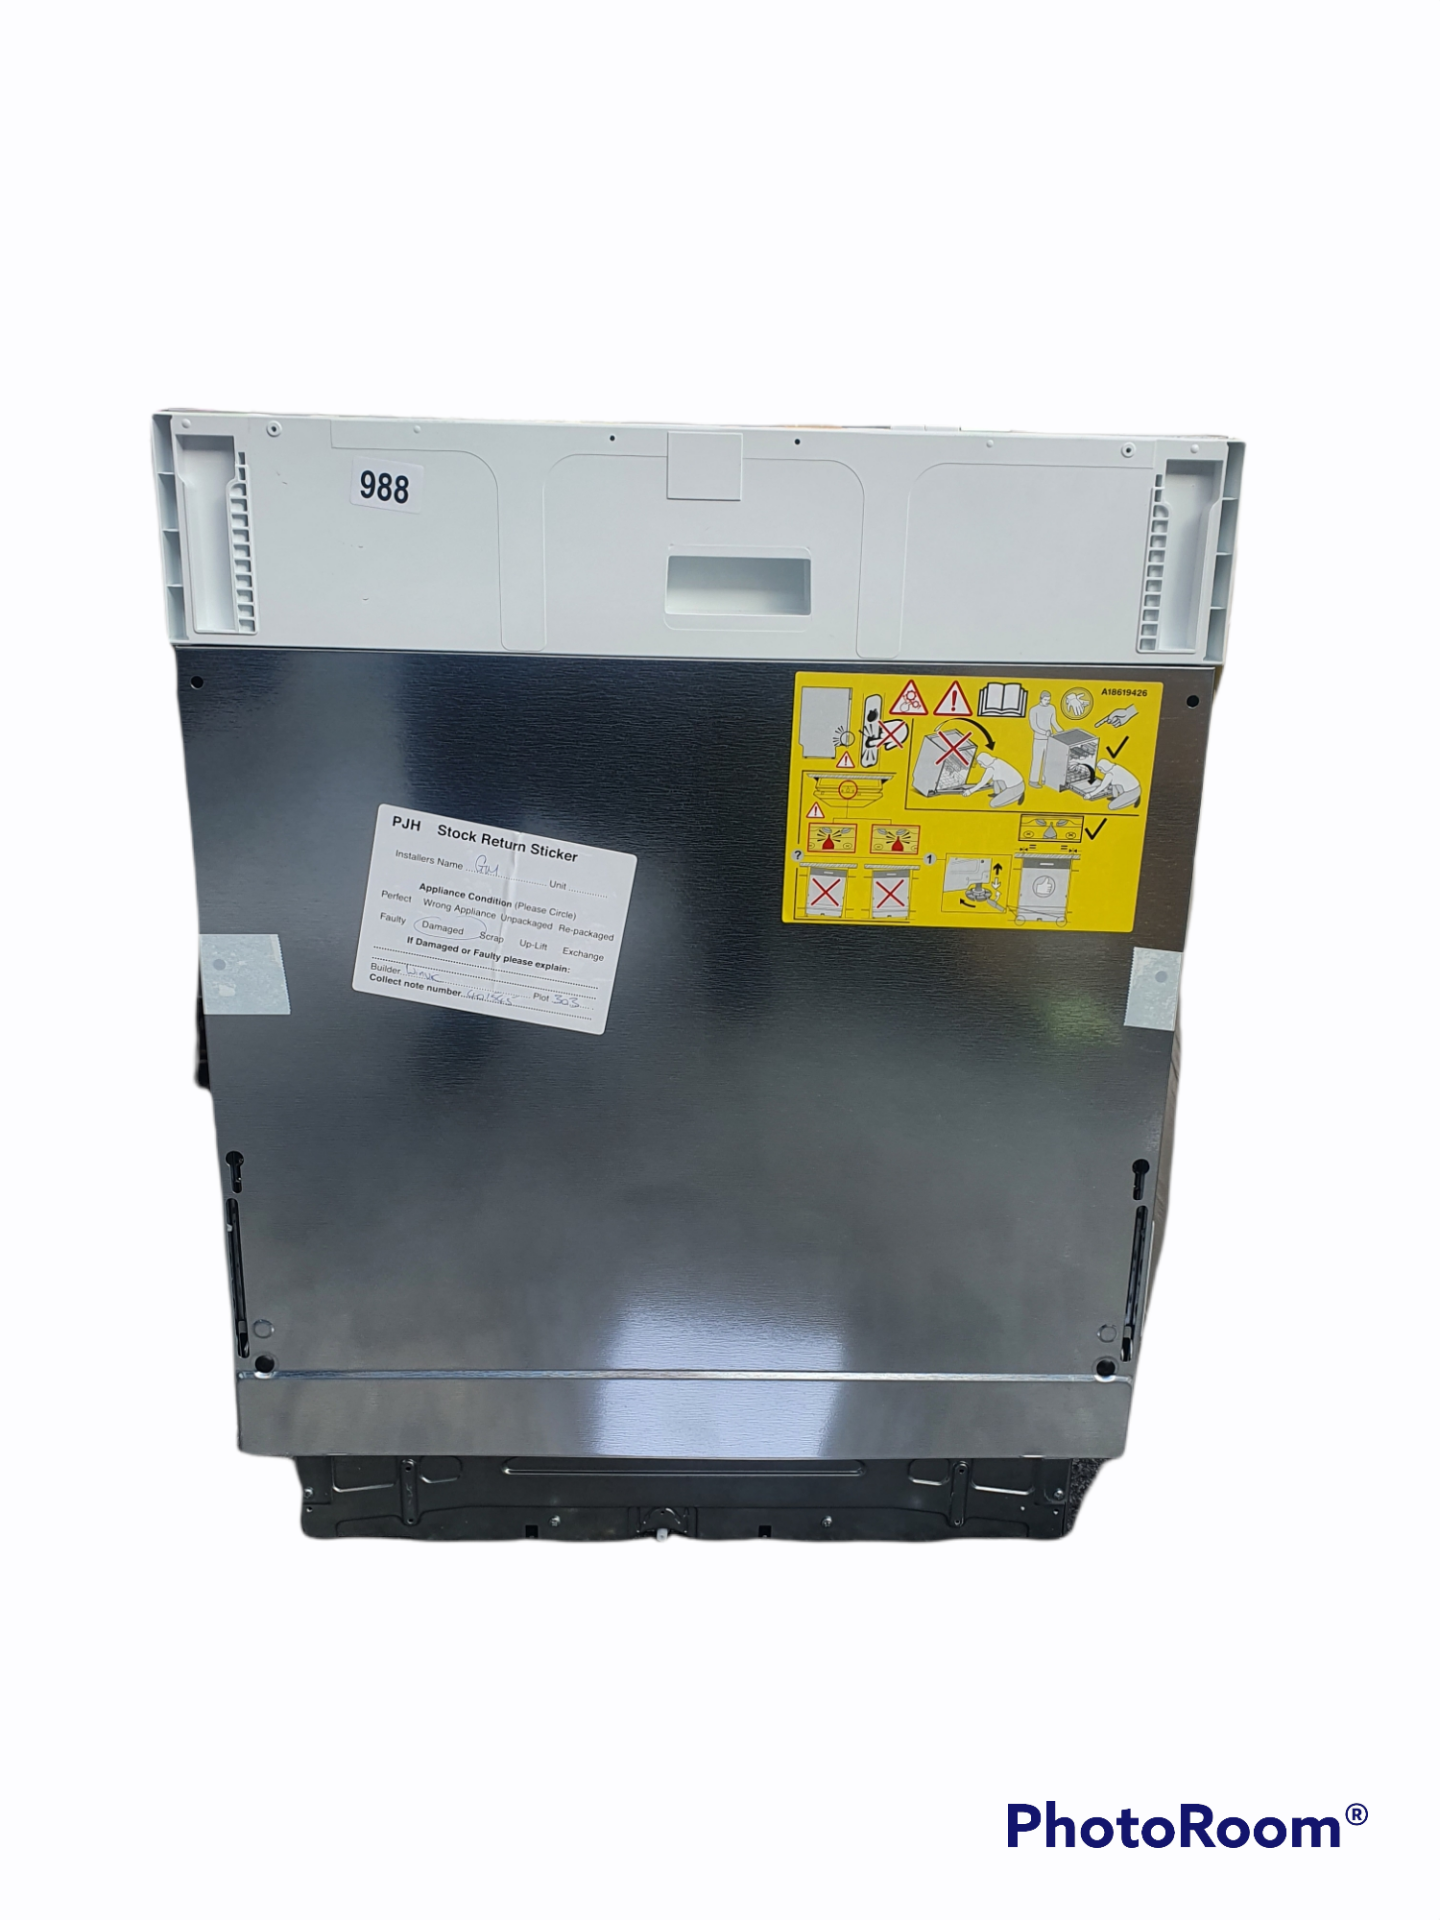 Zanussi ZDLN1511 Fully Integrated Dishwasher RRP £399